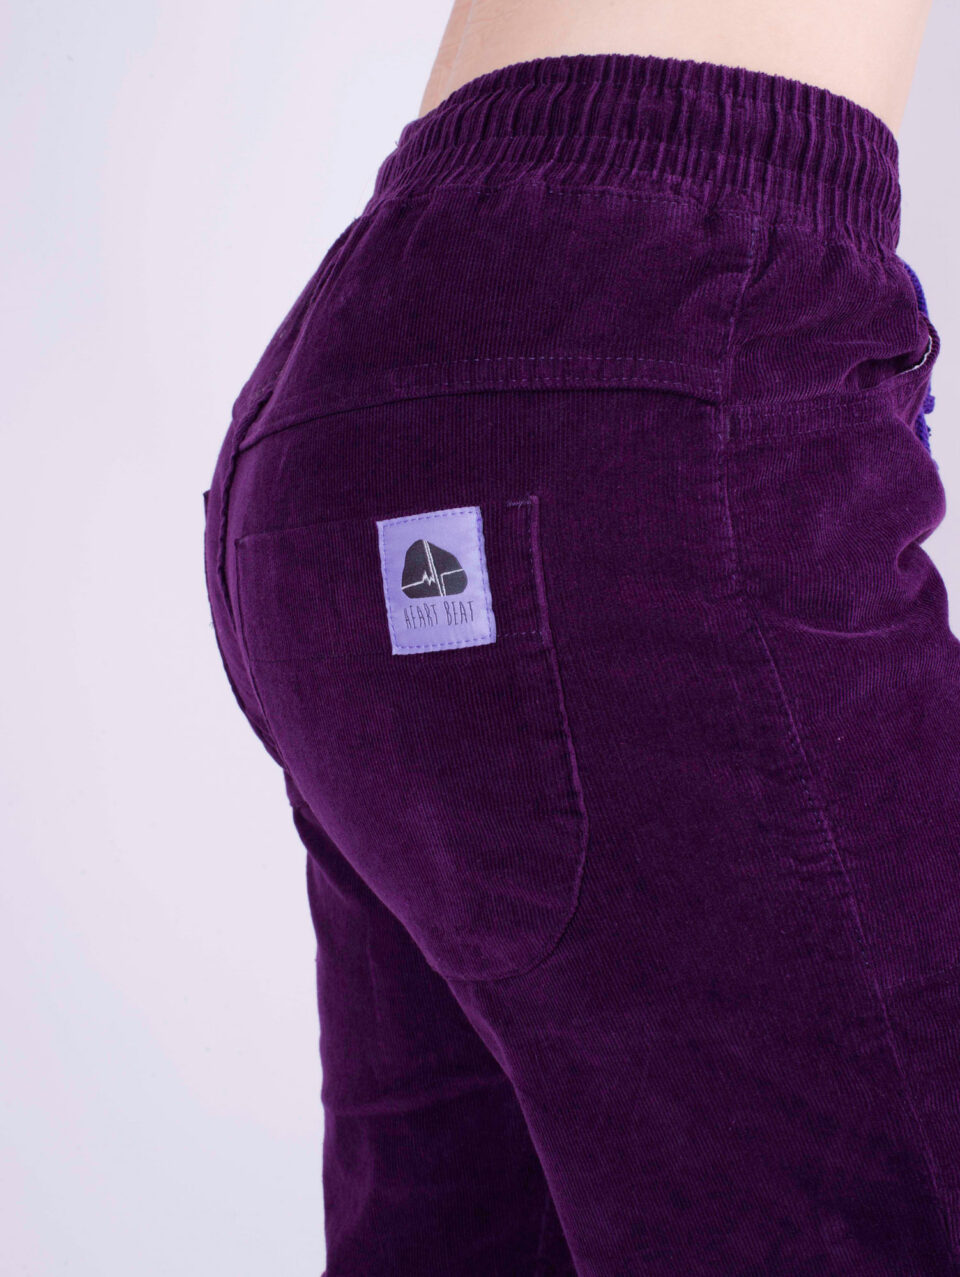 Rocket Pocket corduroy pants - purple